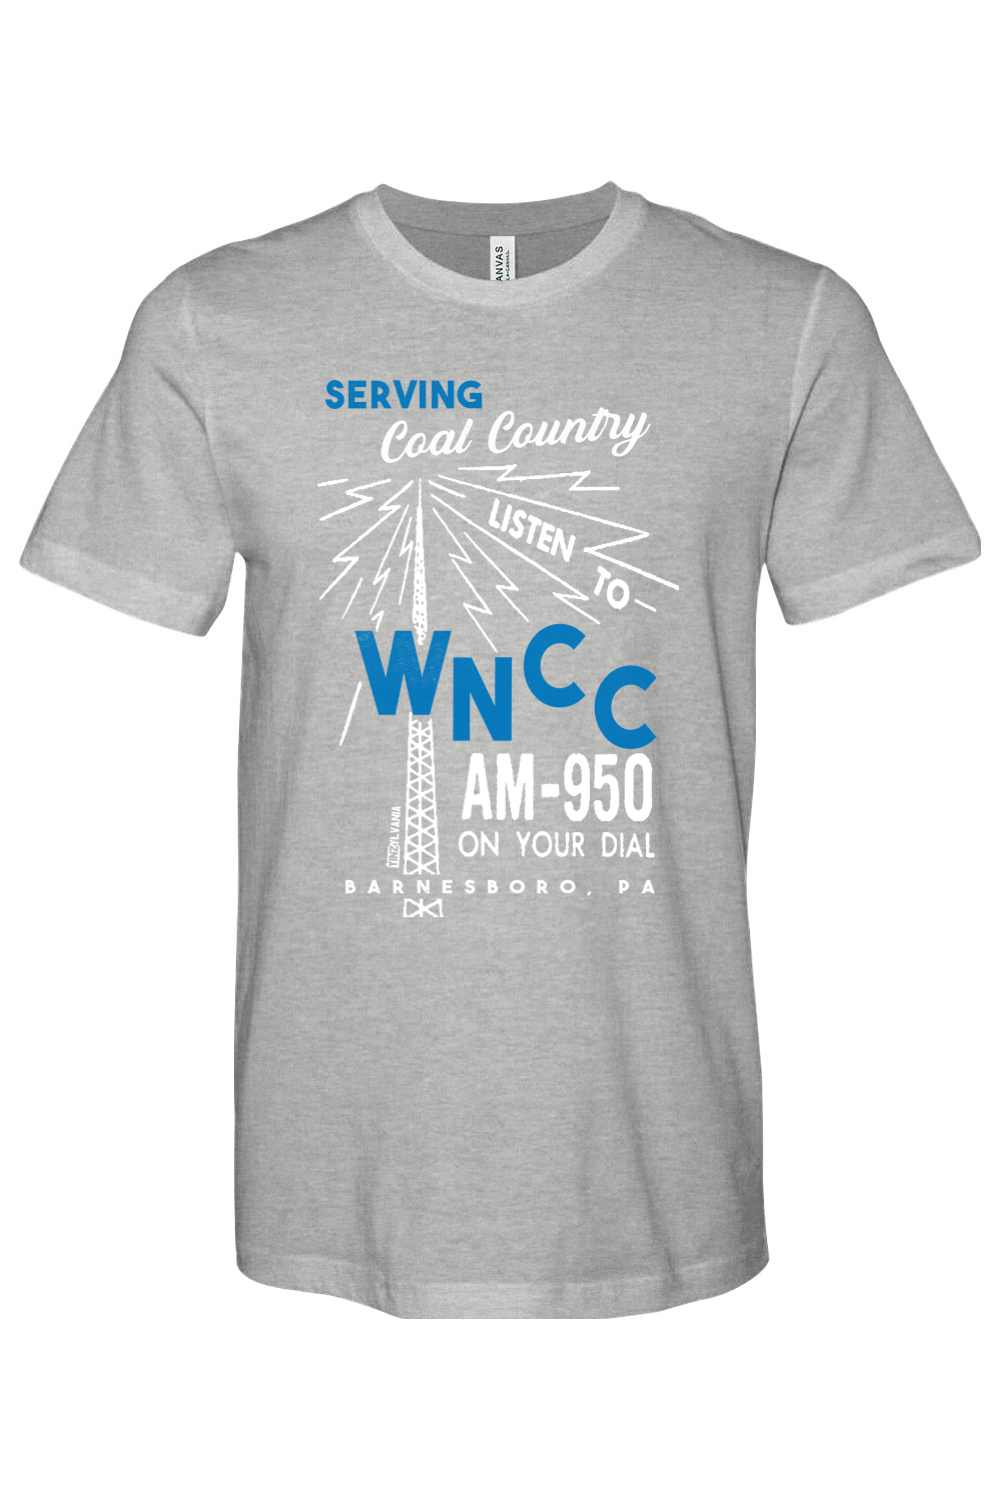 WNCC-AM 950 - Barnesboro, PA - Yinzylvania